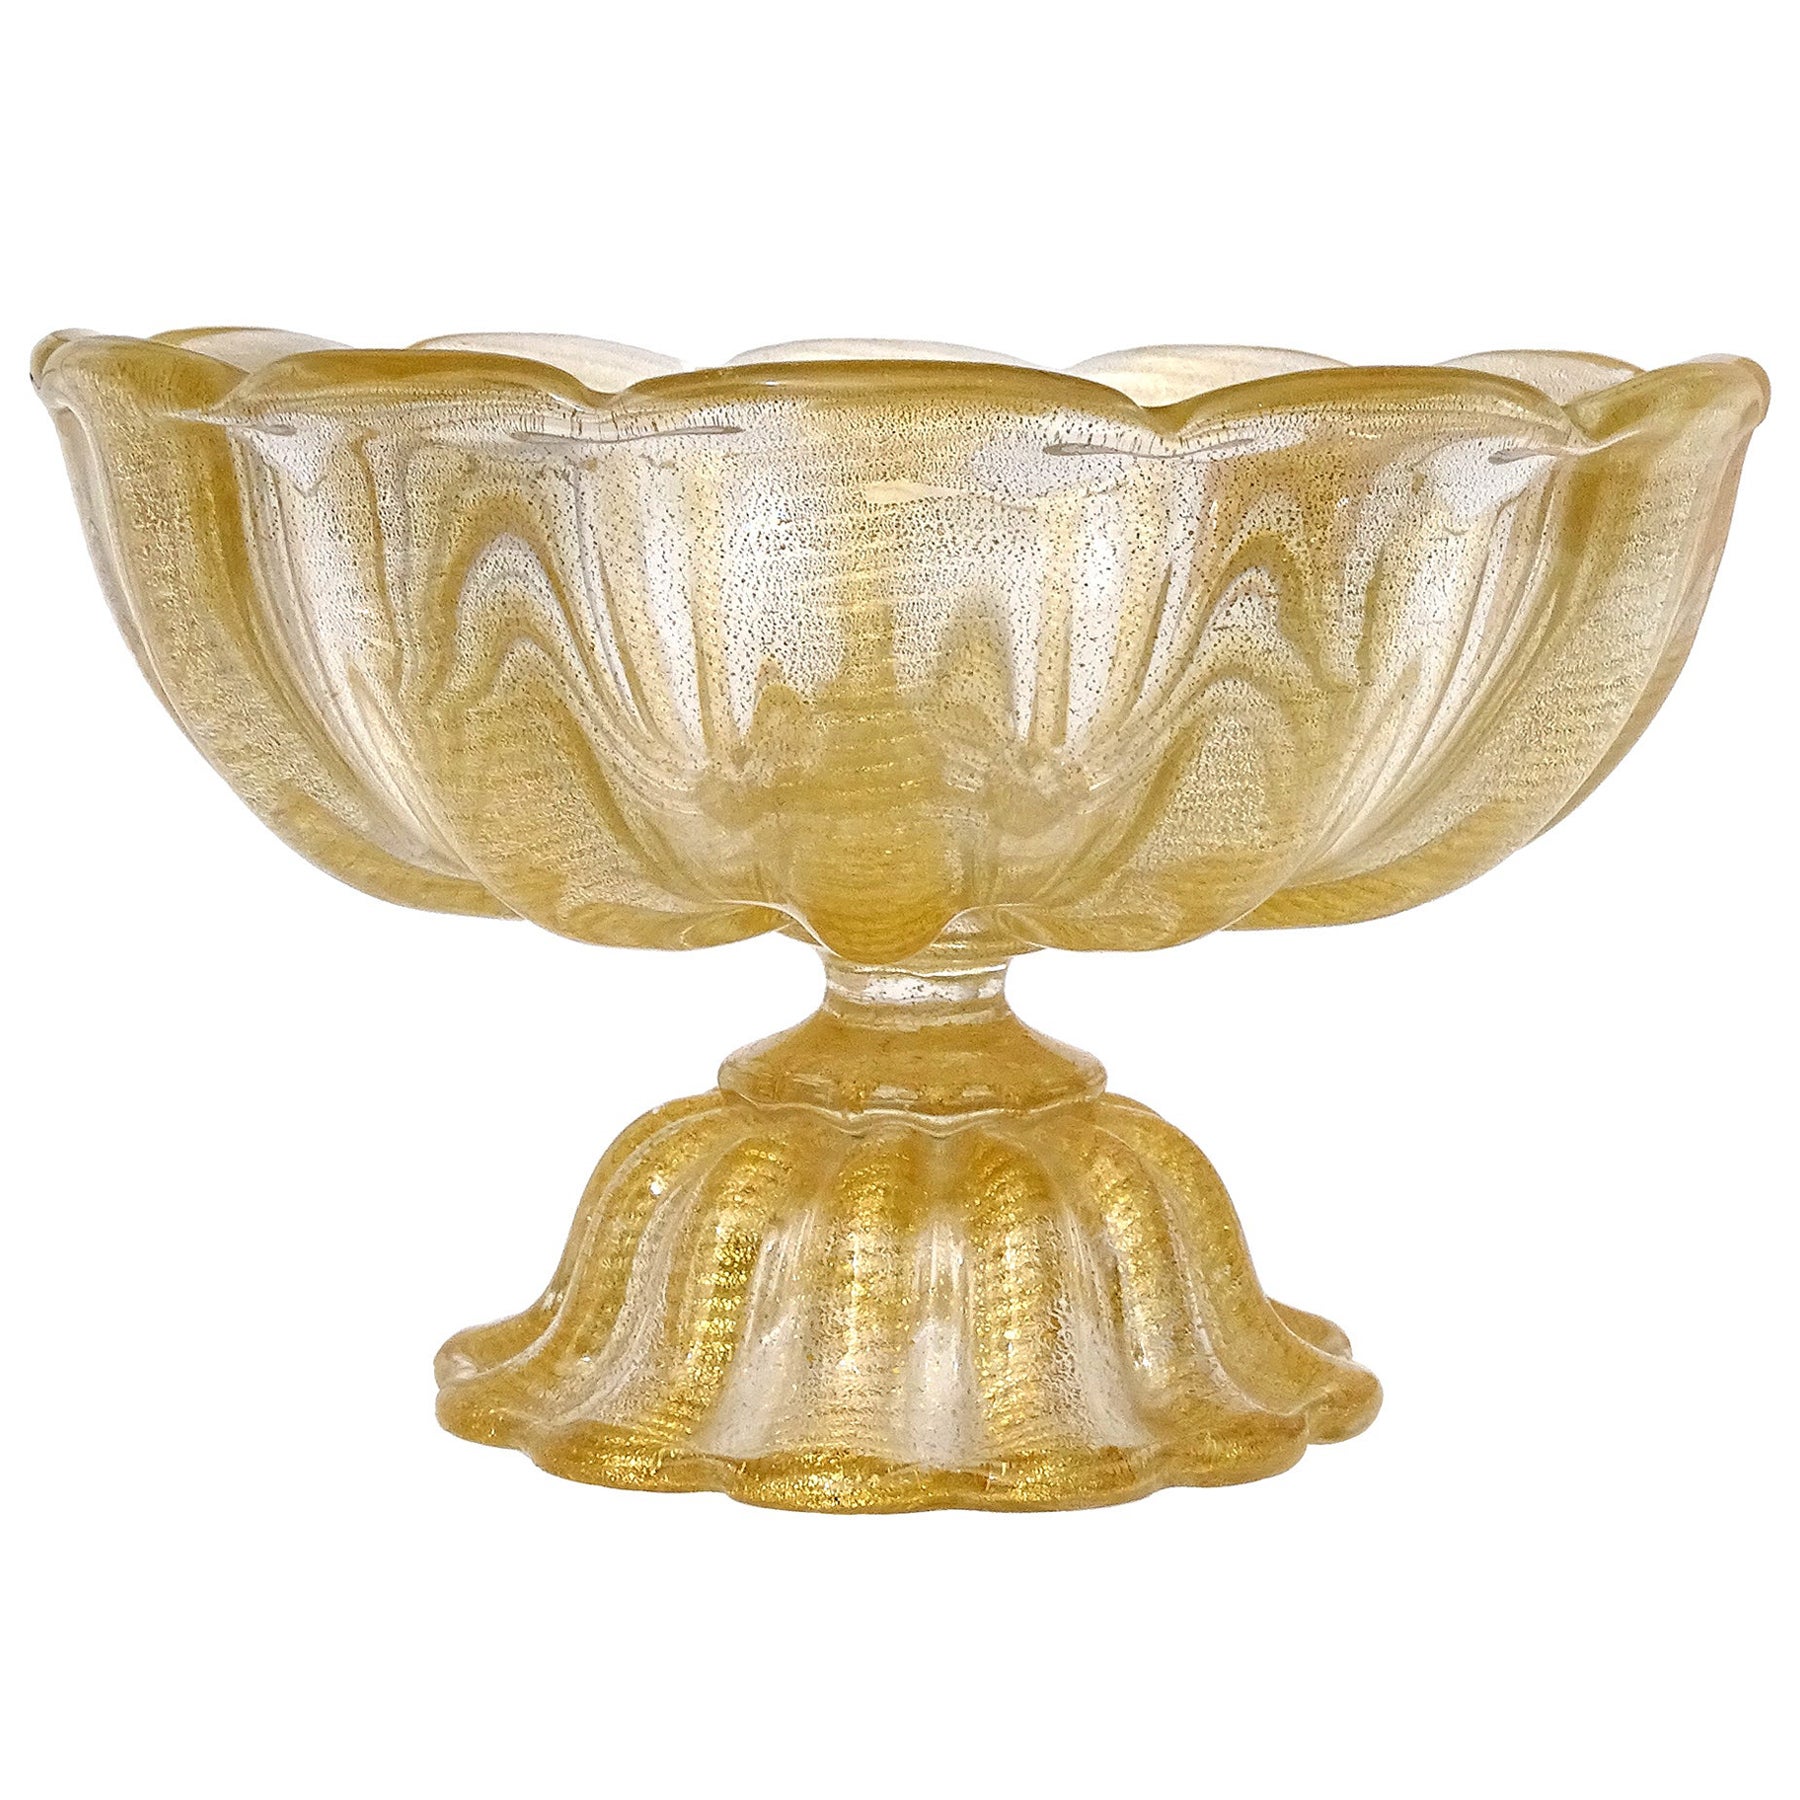 Barovier Toso Murano Large Gold Flecks Italian Art Glass Footed Centerpiece Bowl